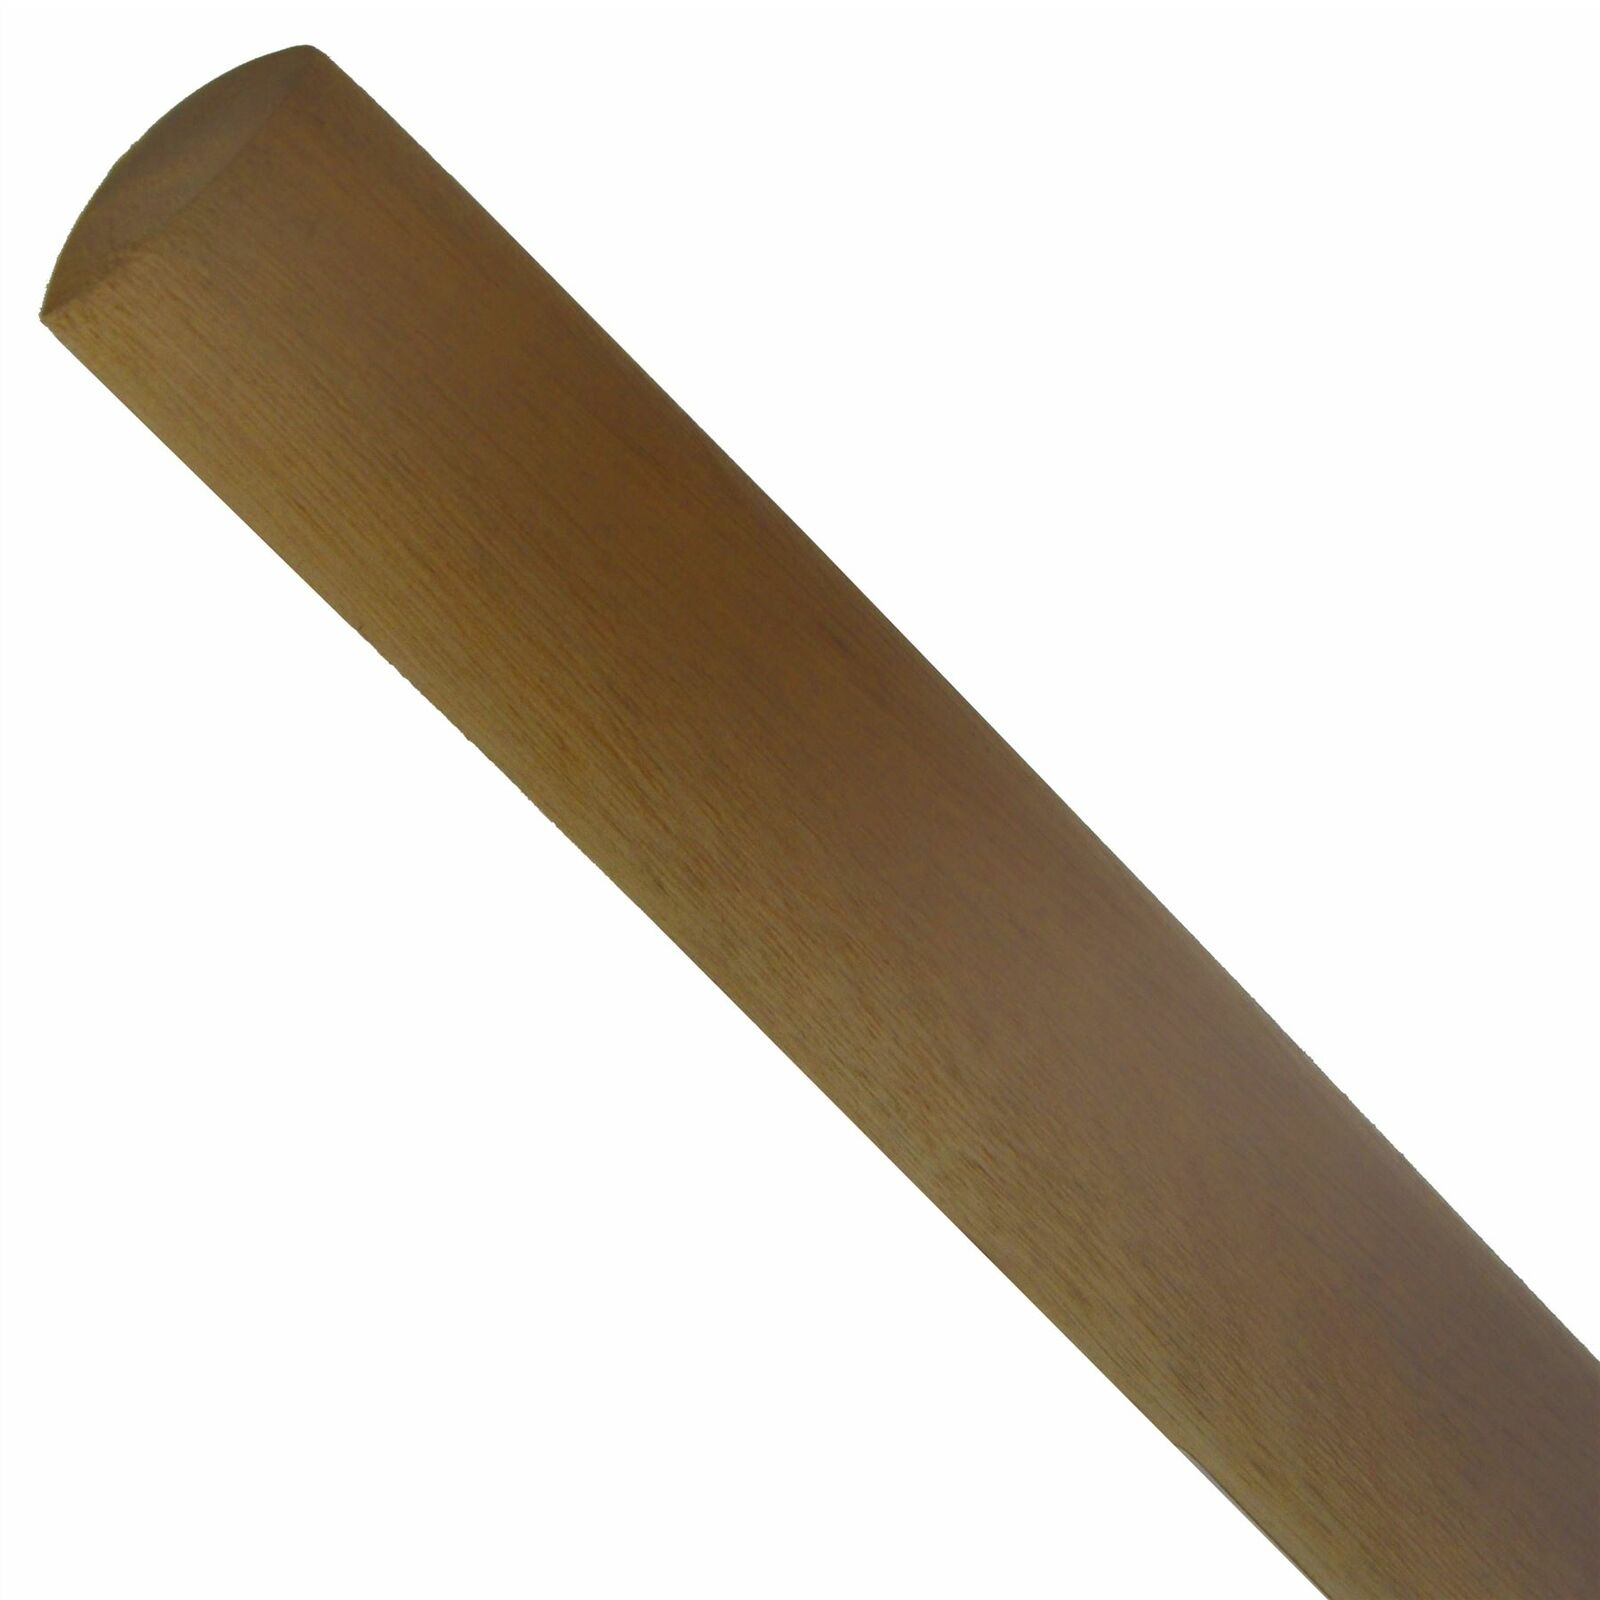 Wooden Broom Handle 150cm X 2.5cm Brush Sweeper Snow Shovel Scoop Sil334